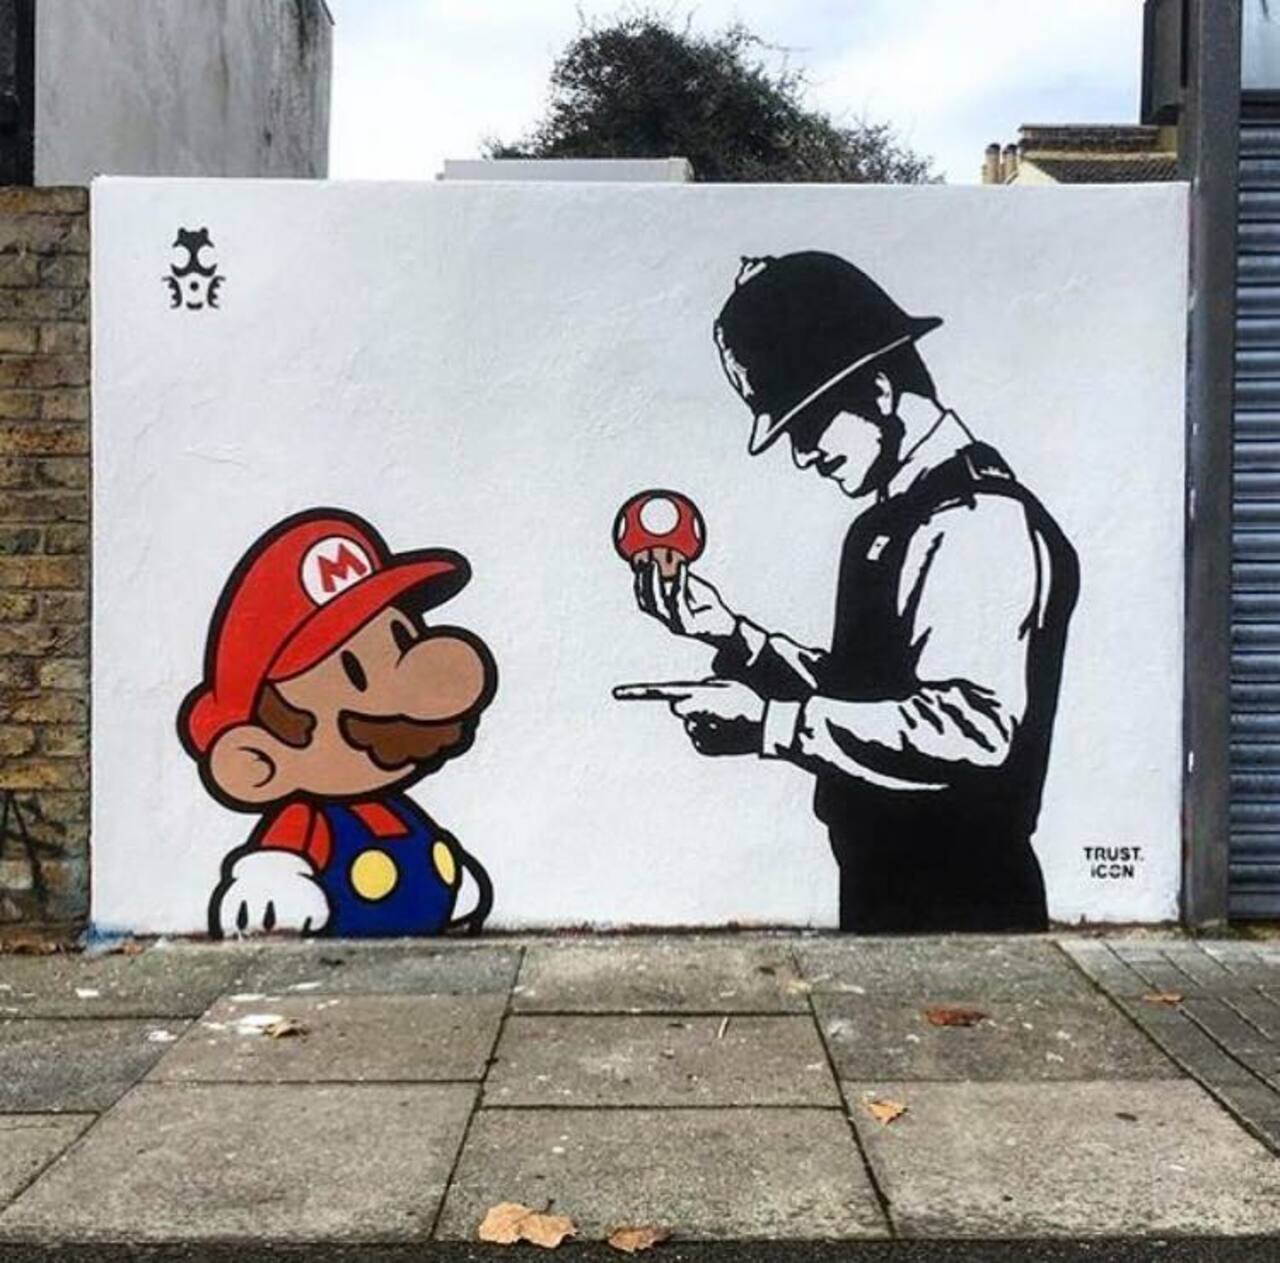 Piece by @trust_icon (with support from @Ldncallingblog) in #Penge, #London! -- #globalstreetart #streetart #art #graffiti https://t.co/peCisl9kOu